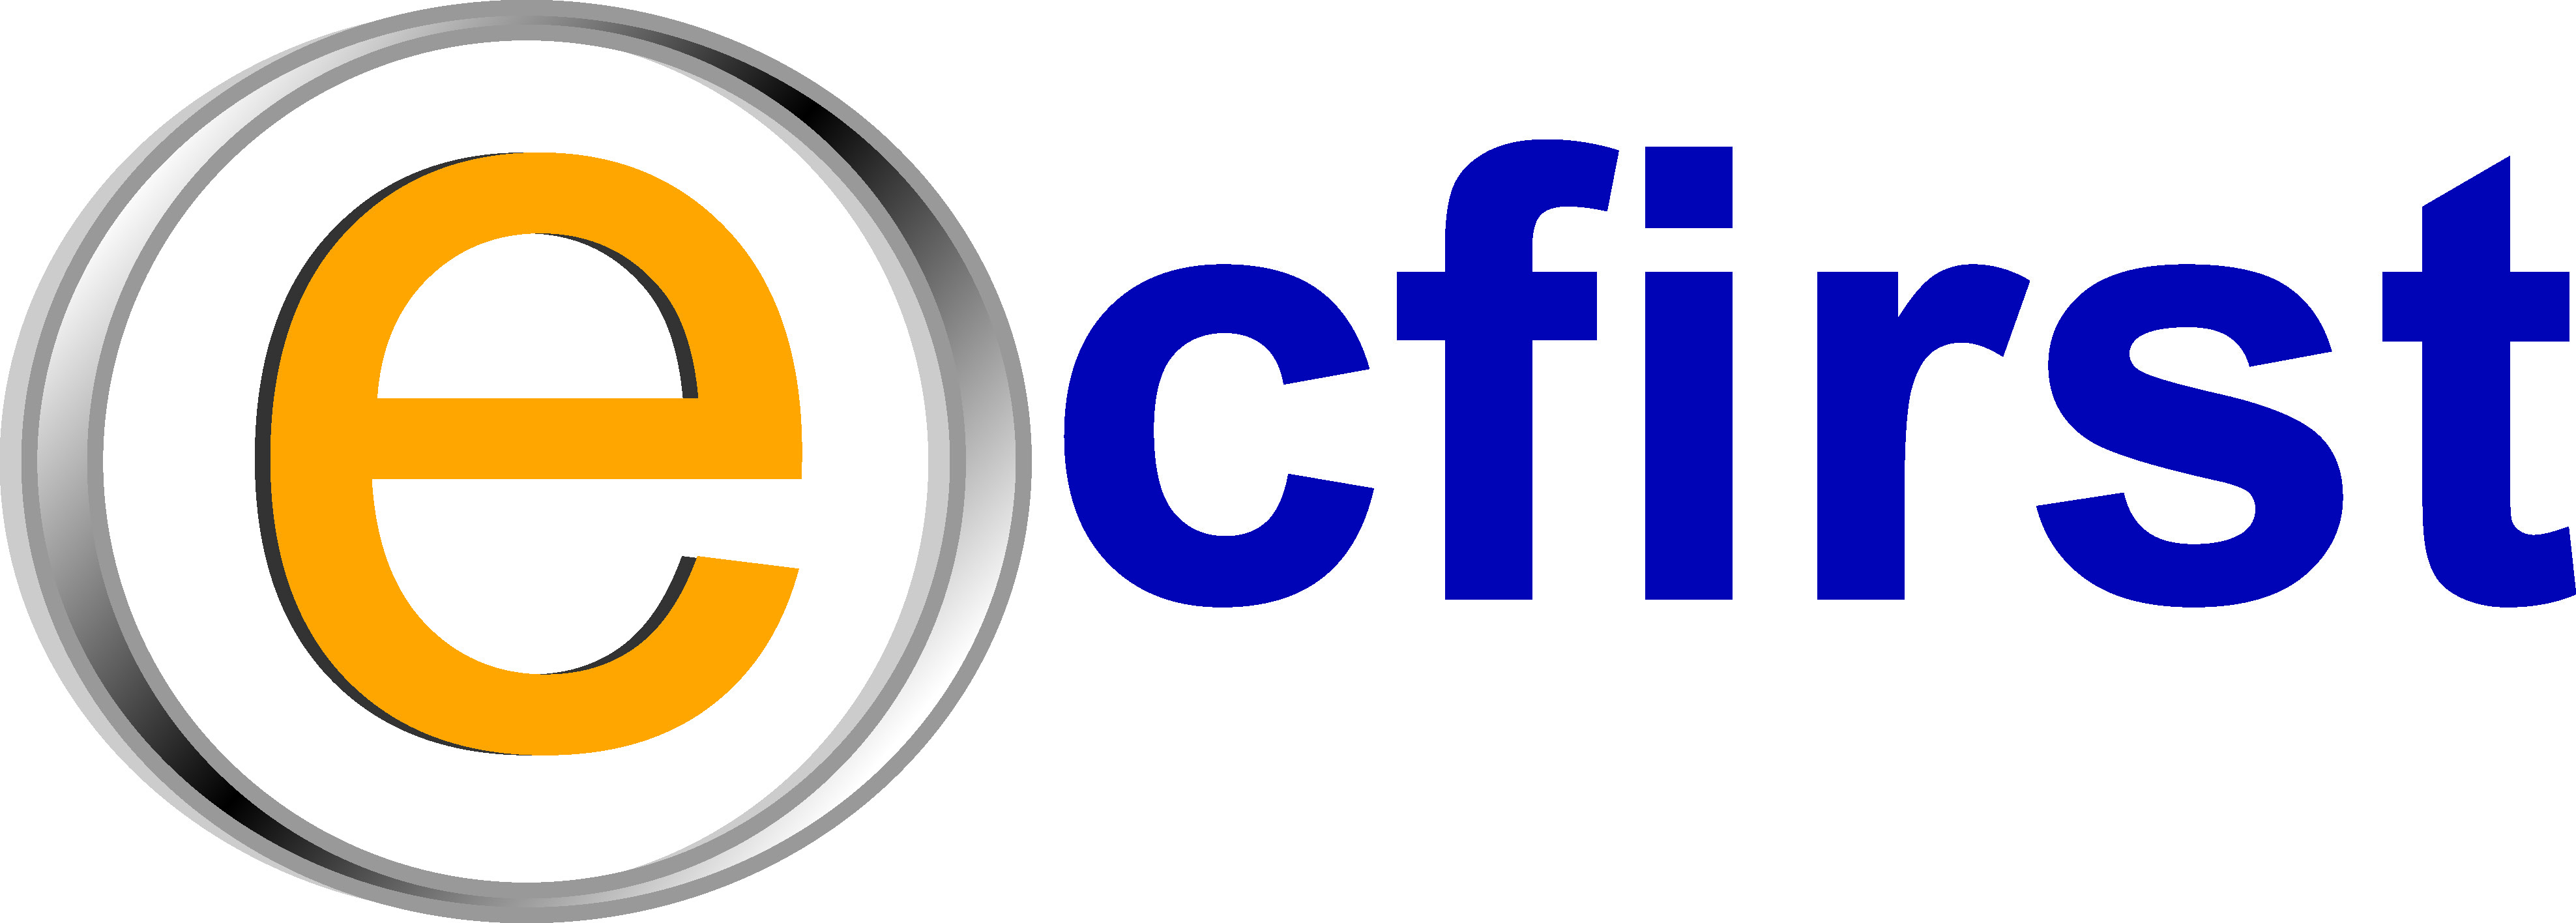 EC First Sponsor Logo